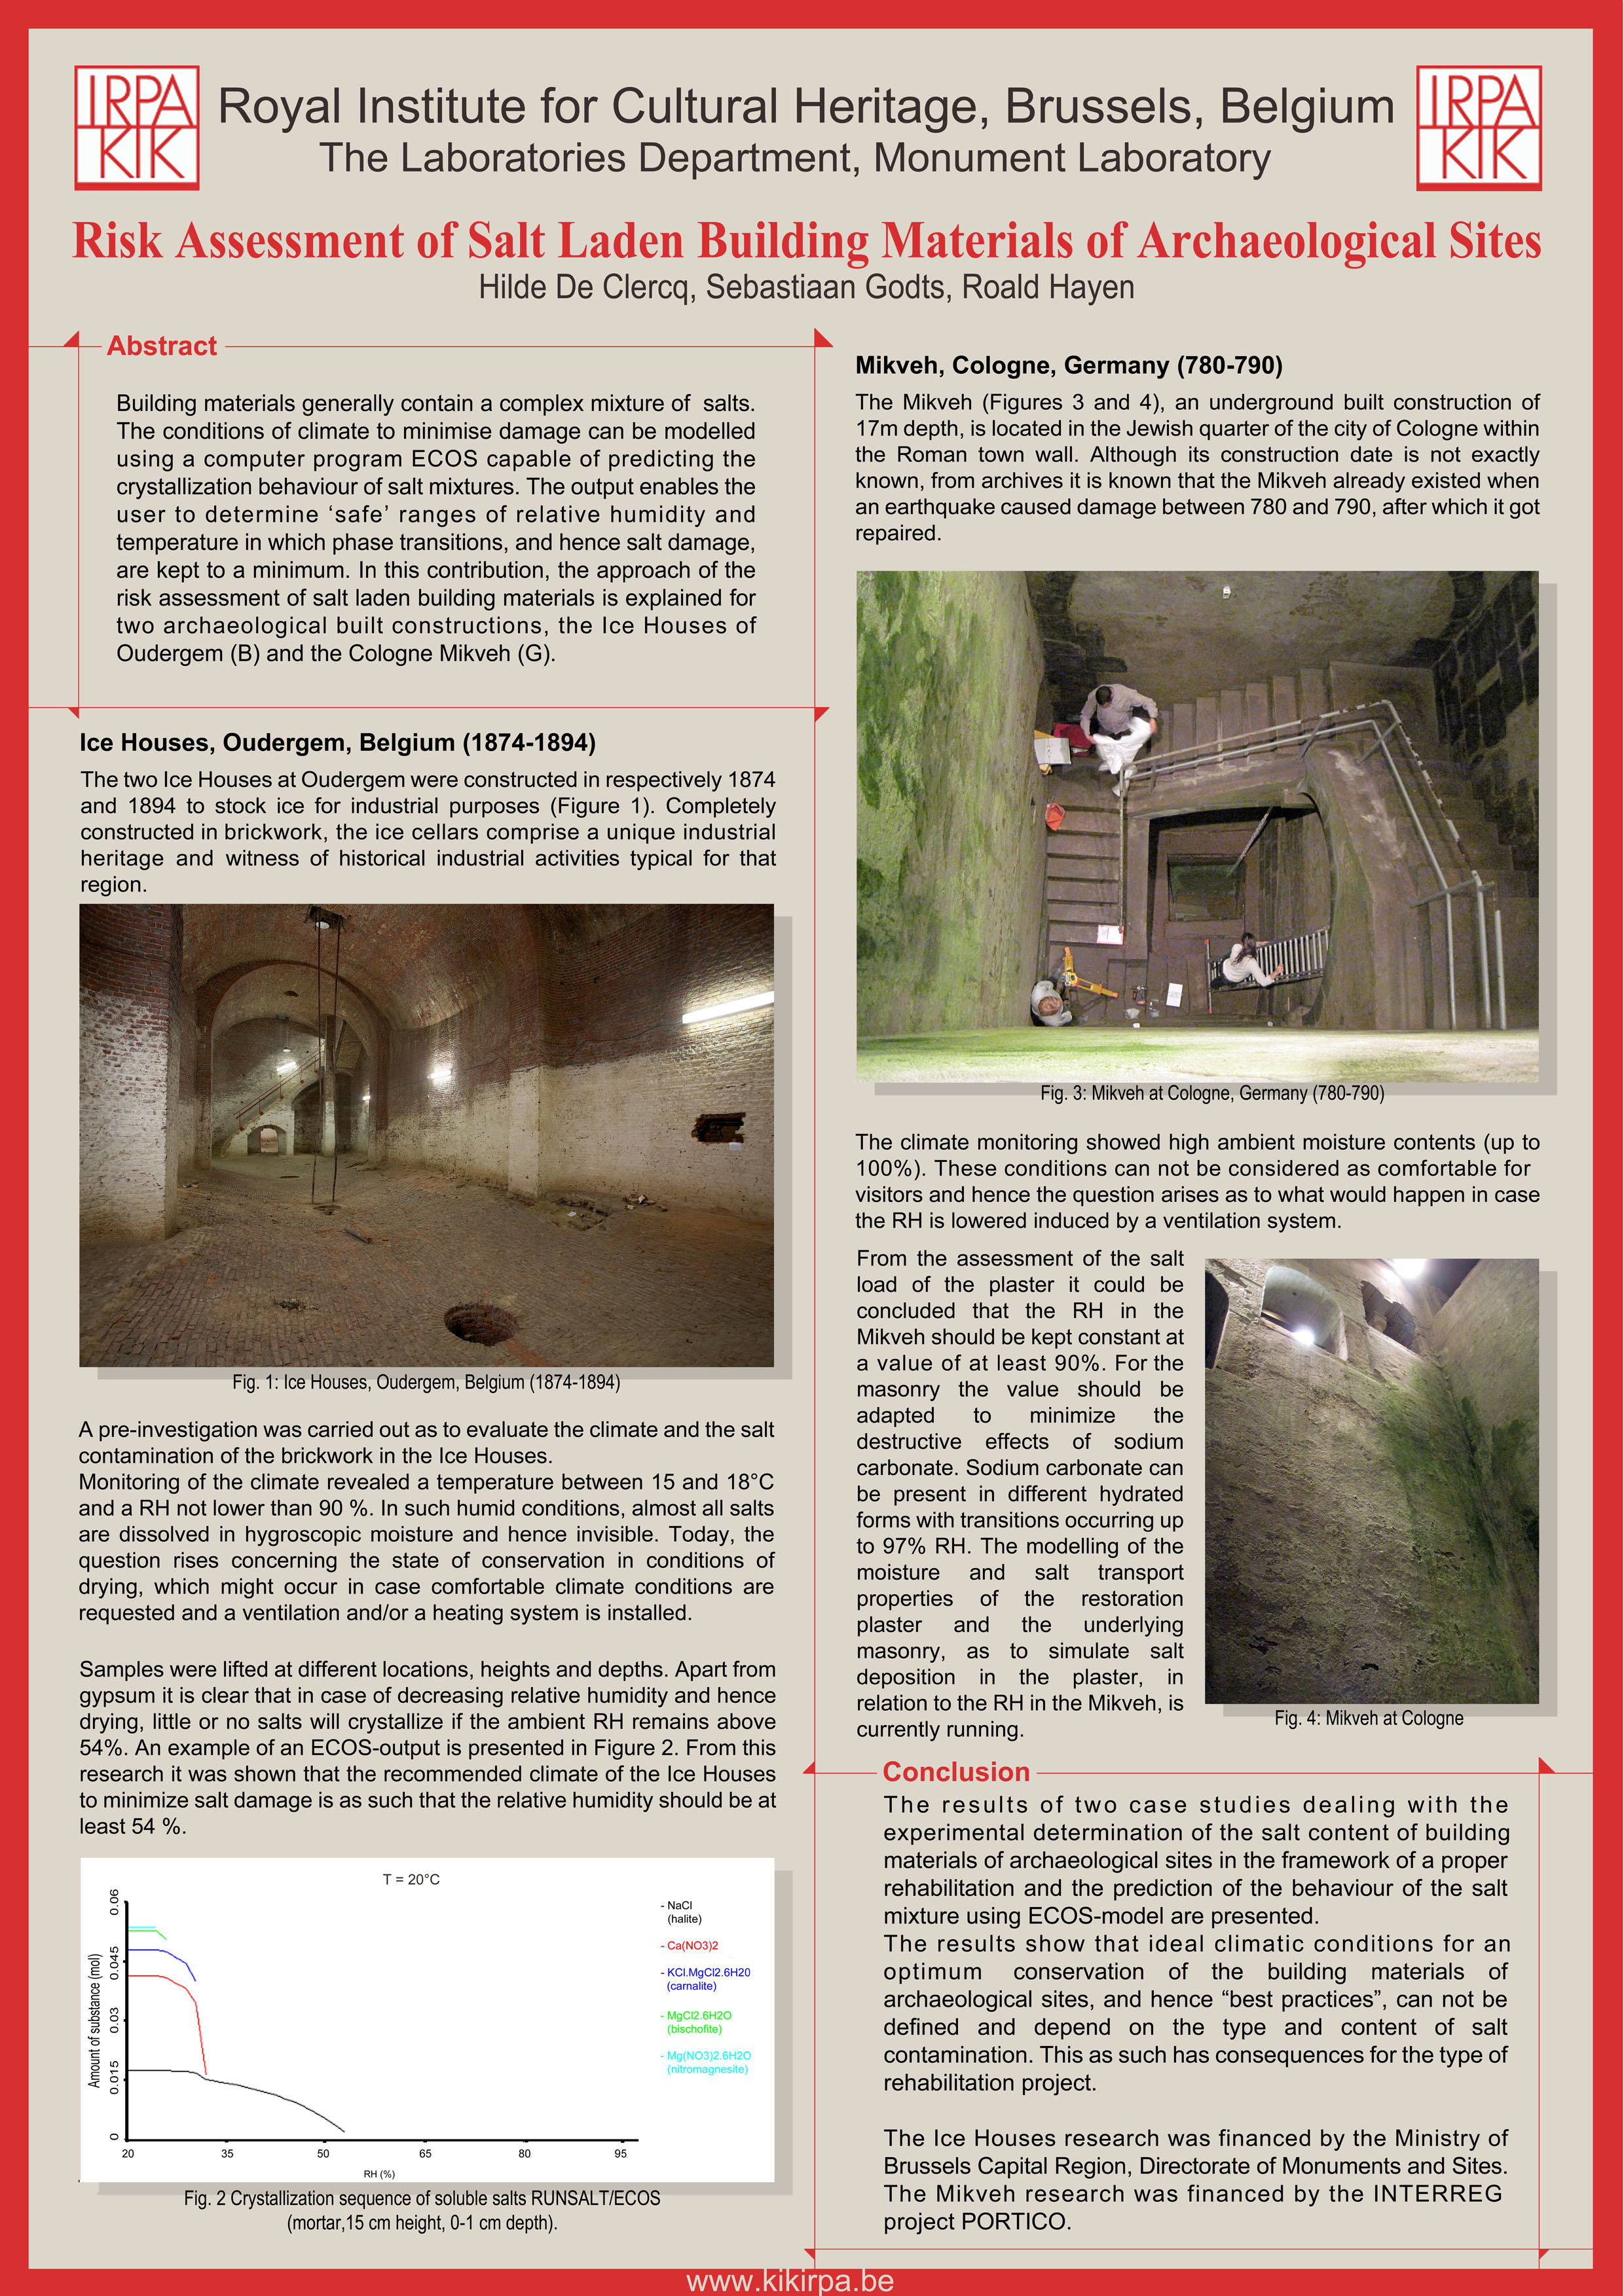 "Risk Assessment of Salt Laden Building Materials of Archaeological Sites" By Hilde De Clercq, Sebastiaan Franciscus Godt and Roald Hayen